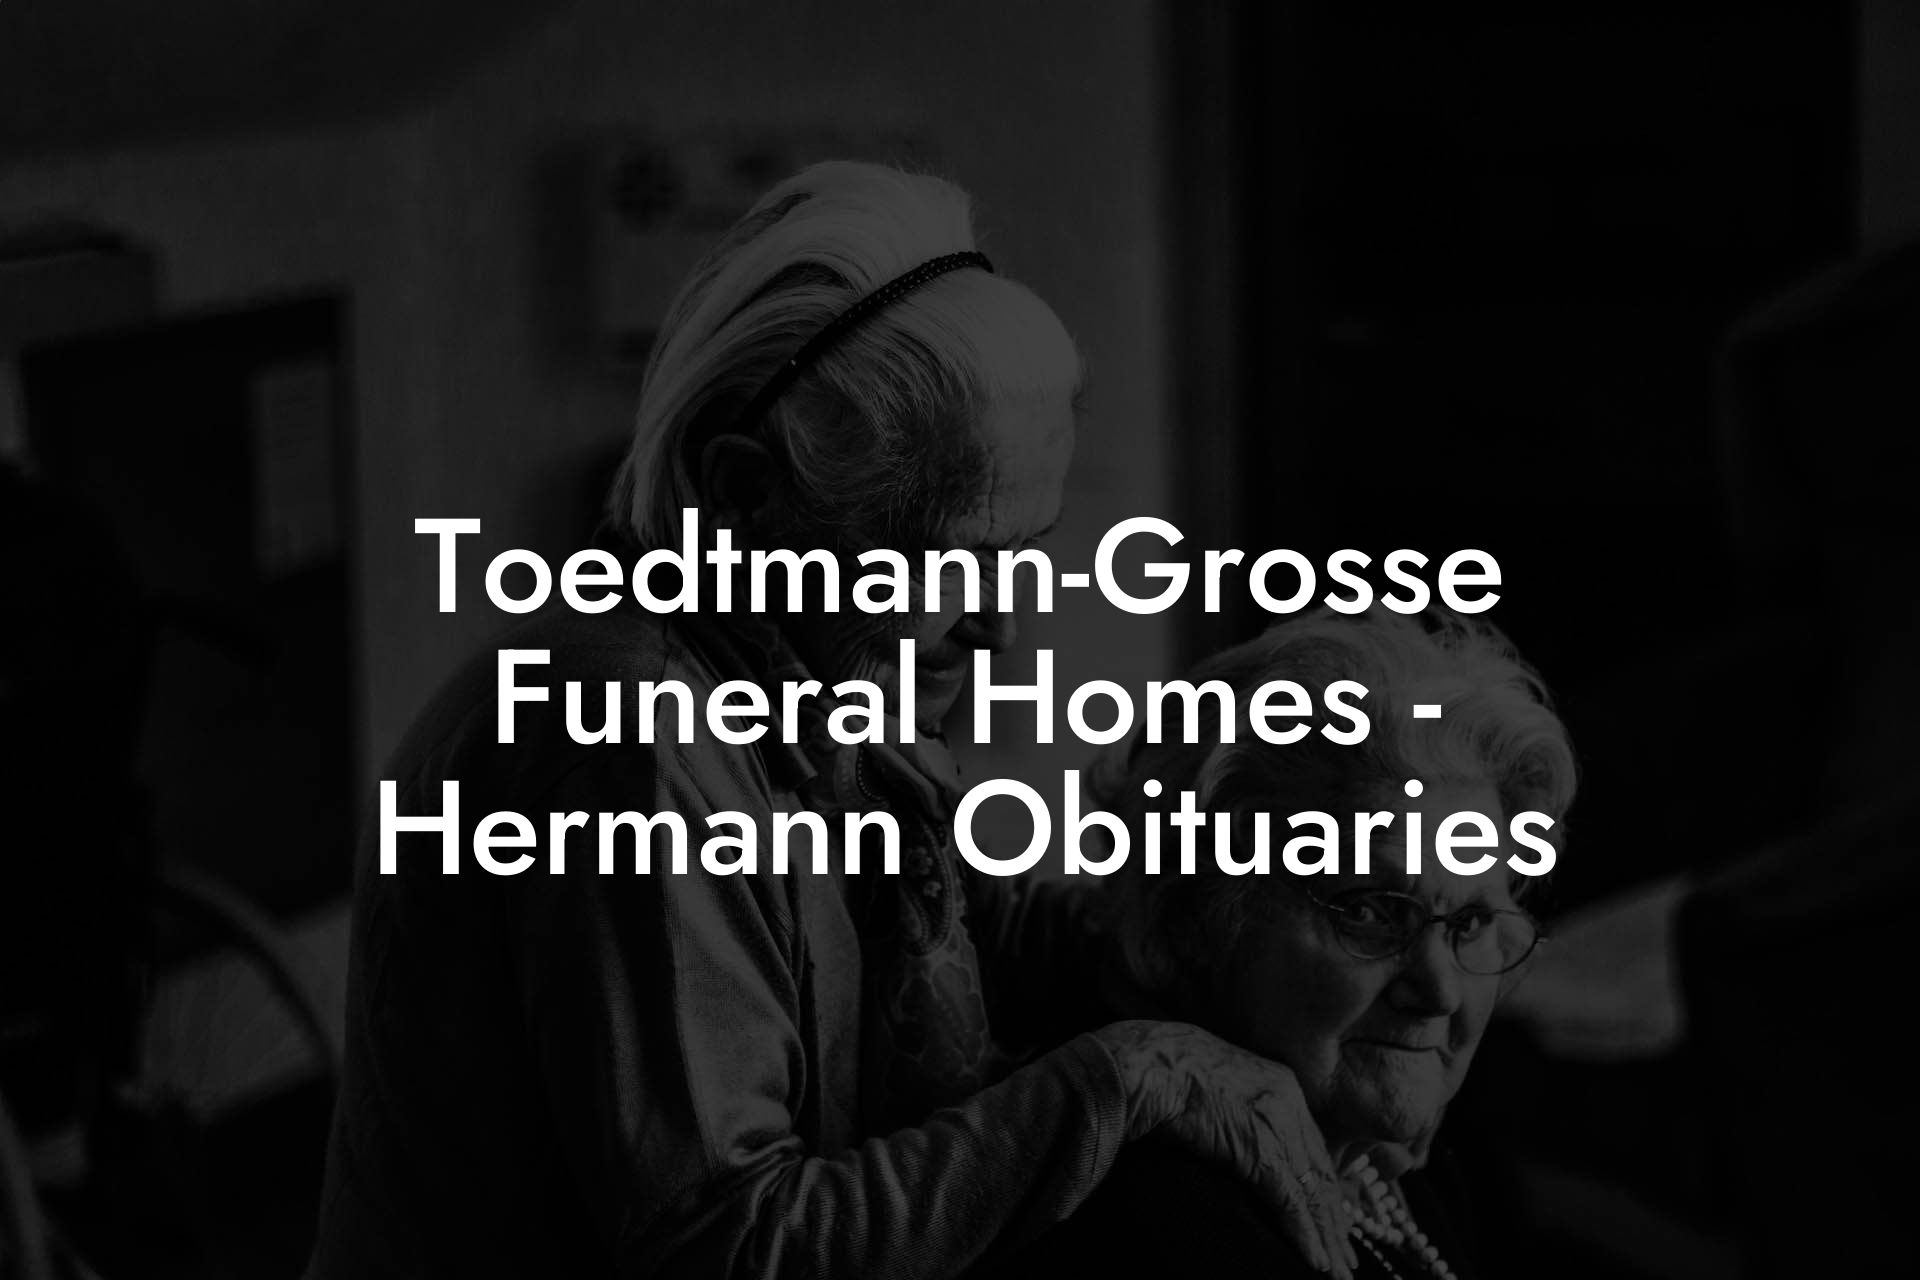 Toedtmann-Grosse Funeral Homes - Hermann Obituaries